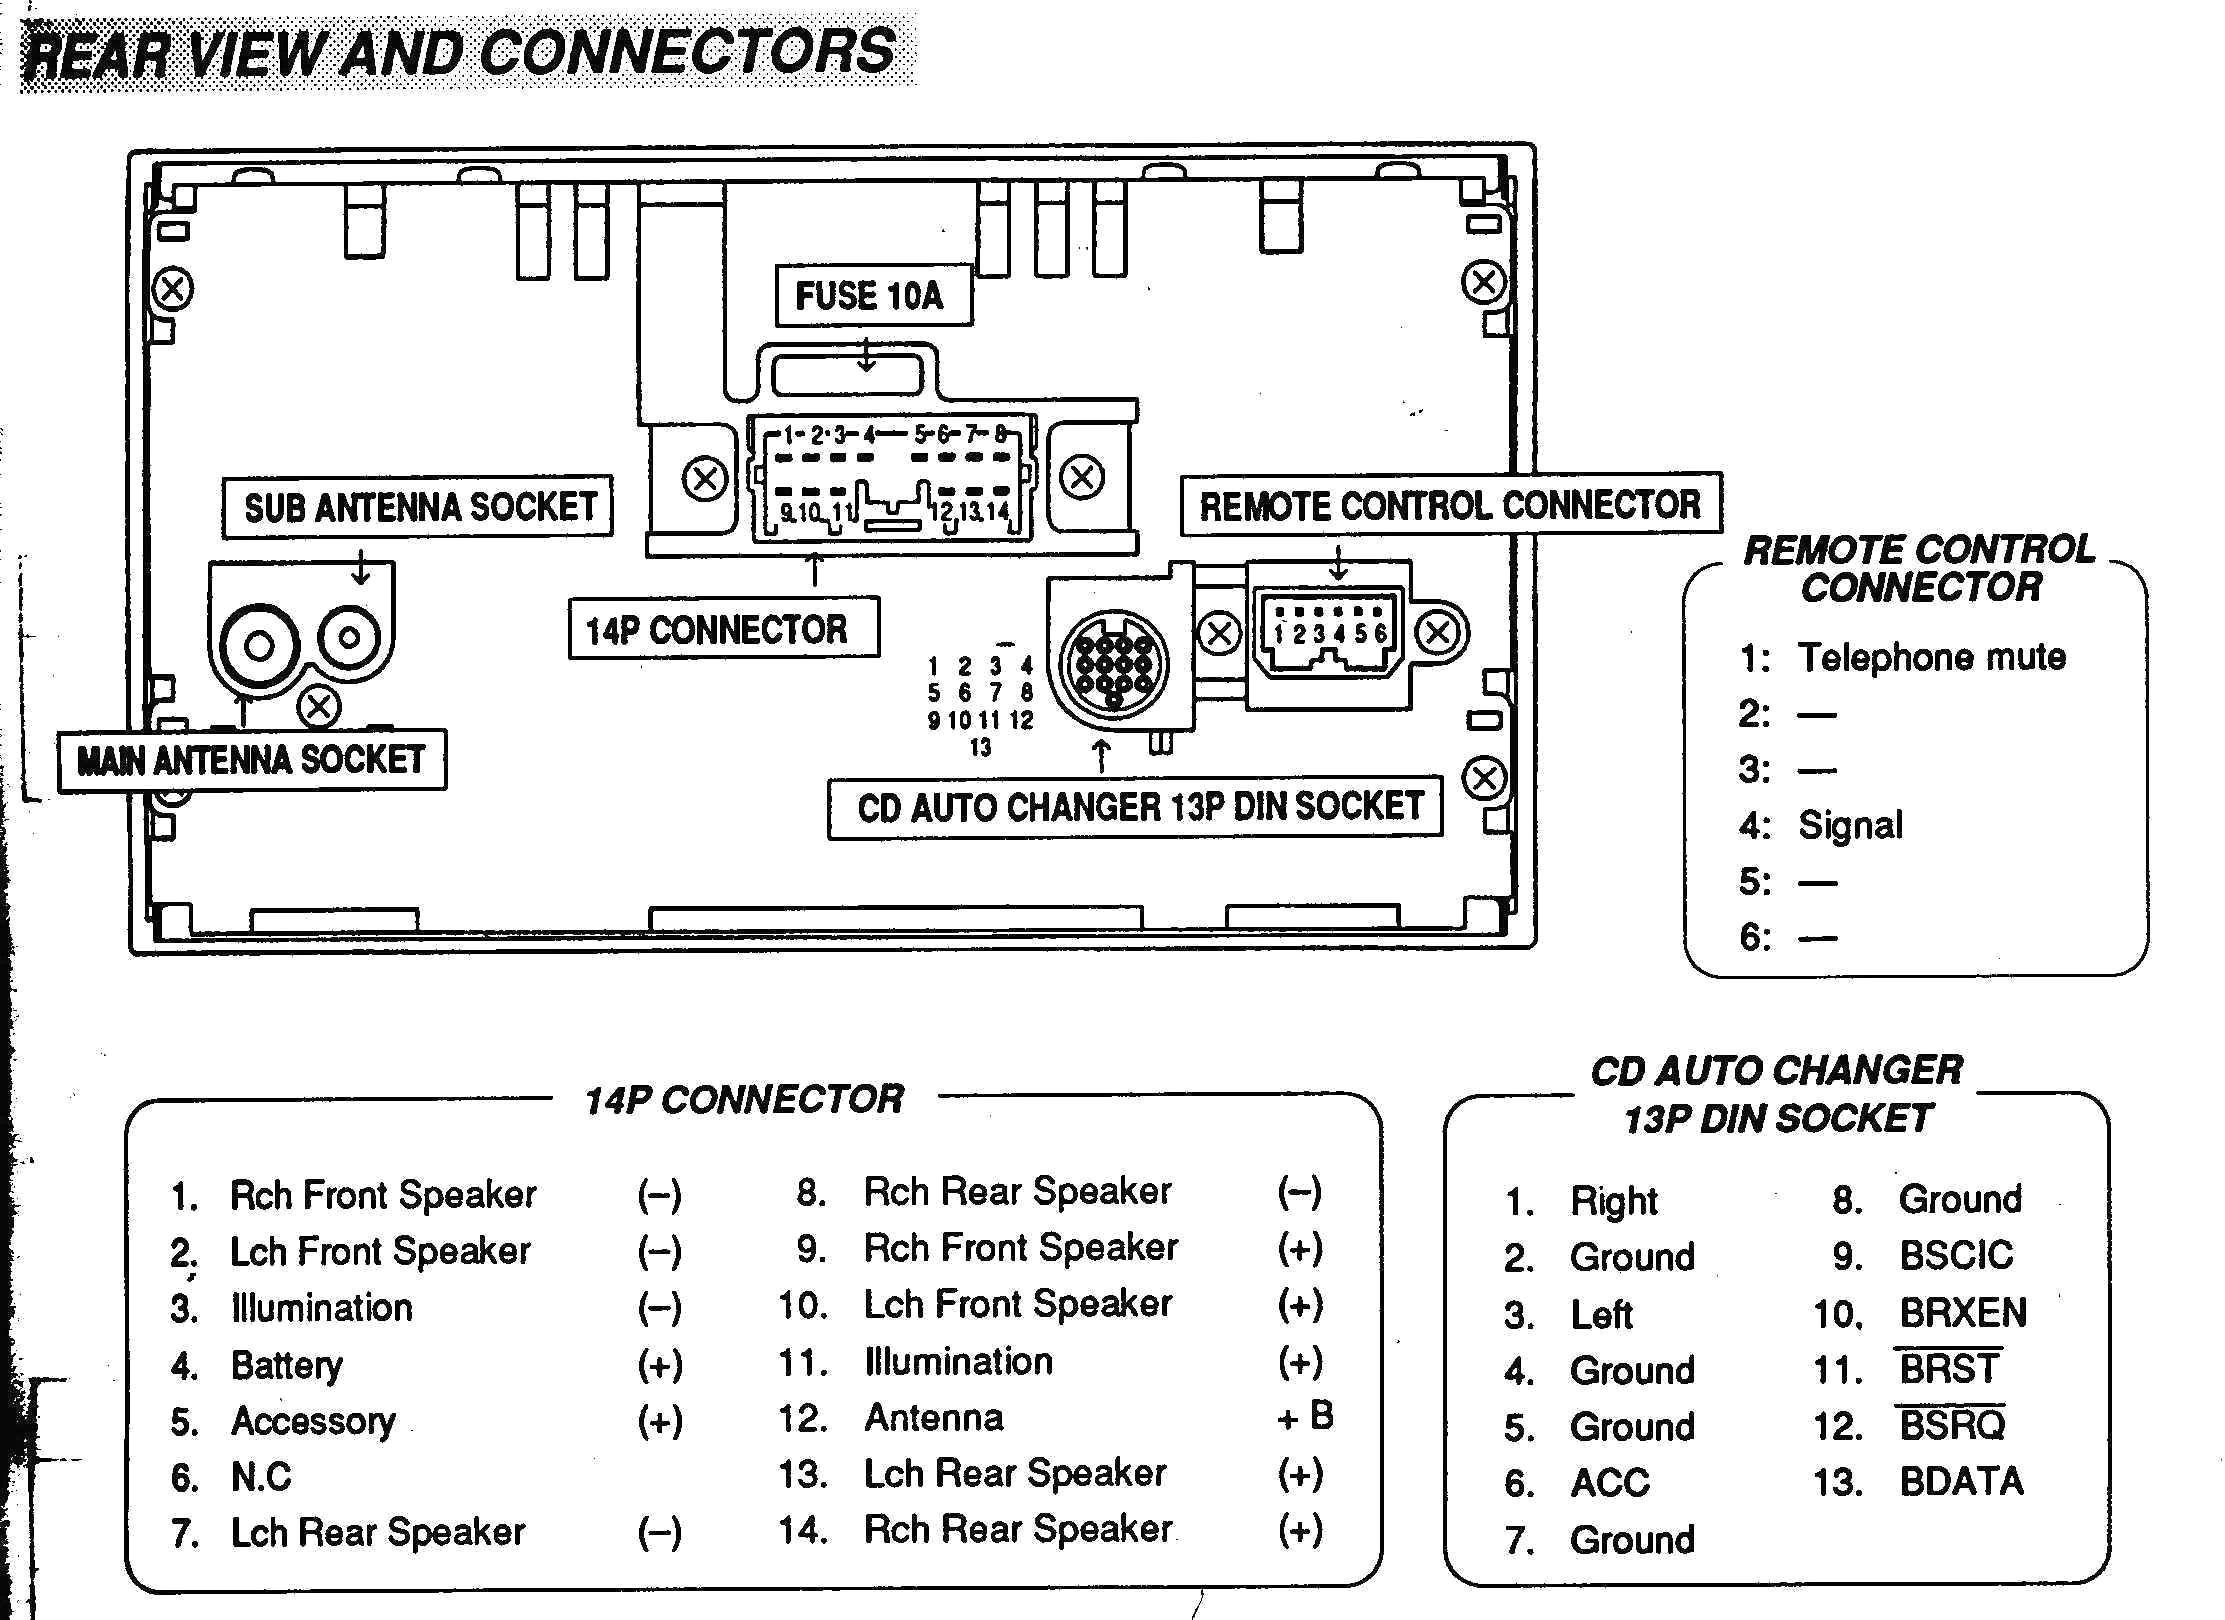 Car Radio Wiring Diagrams Chevy Car Stereo Wiring Diagram Copy Car Radio Wiring 2001 Chevy Of Car Radio Wiring Diagrams